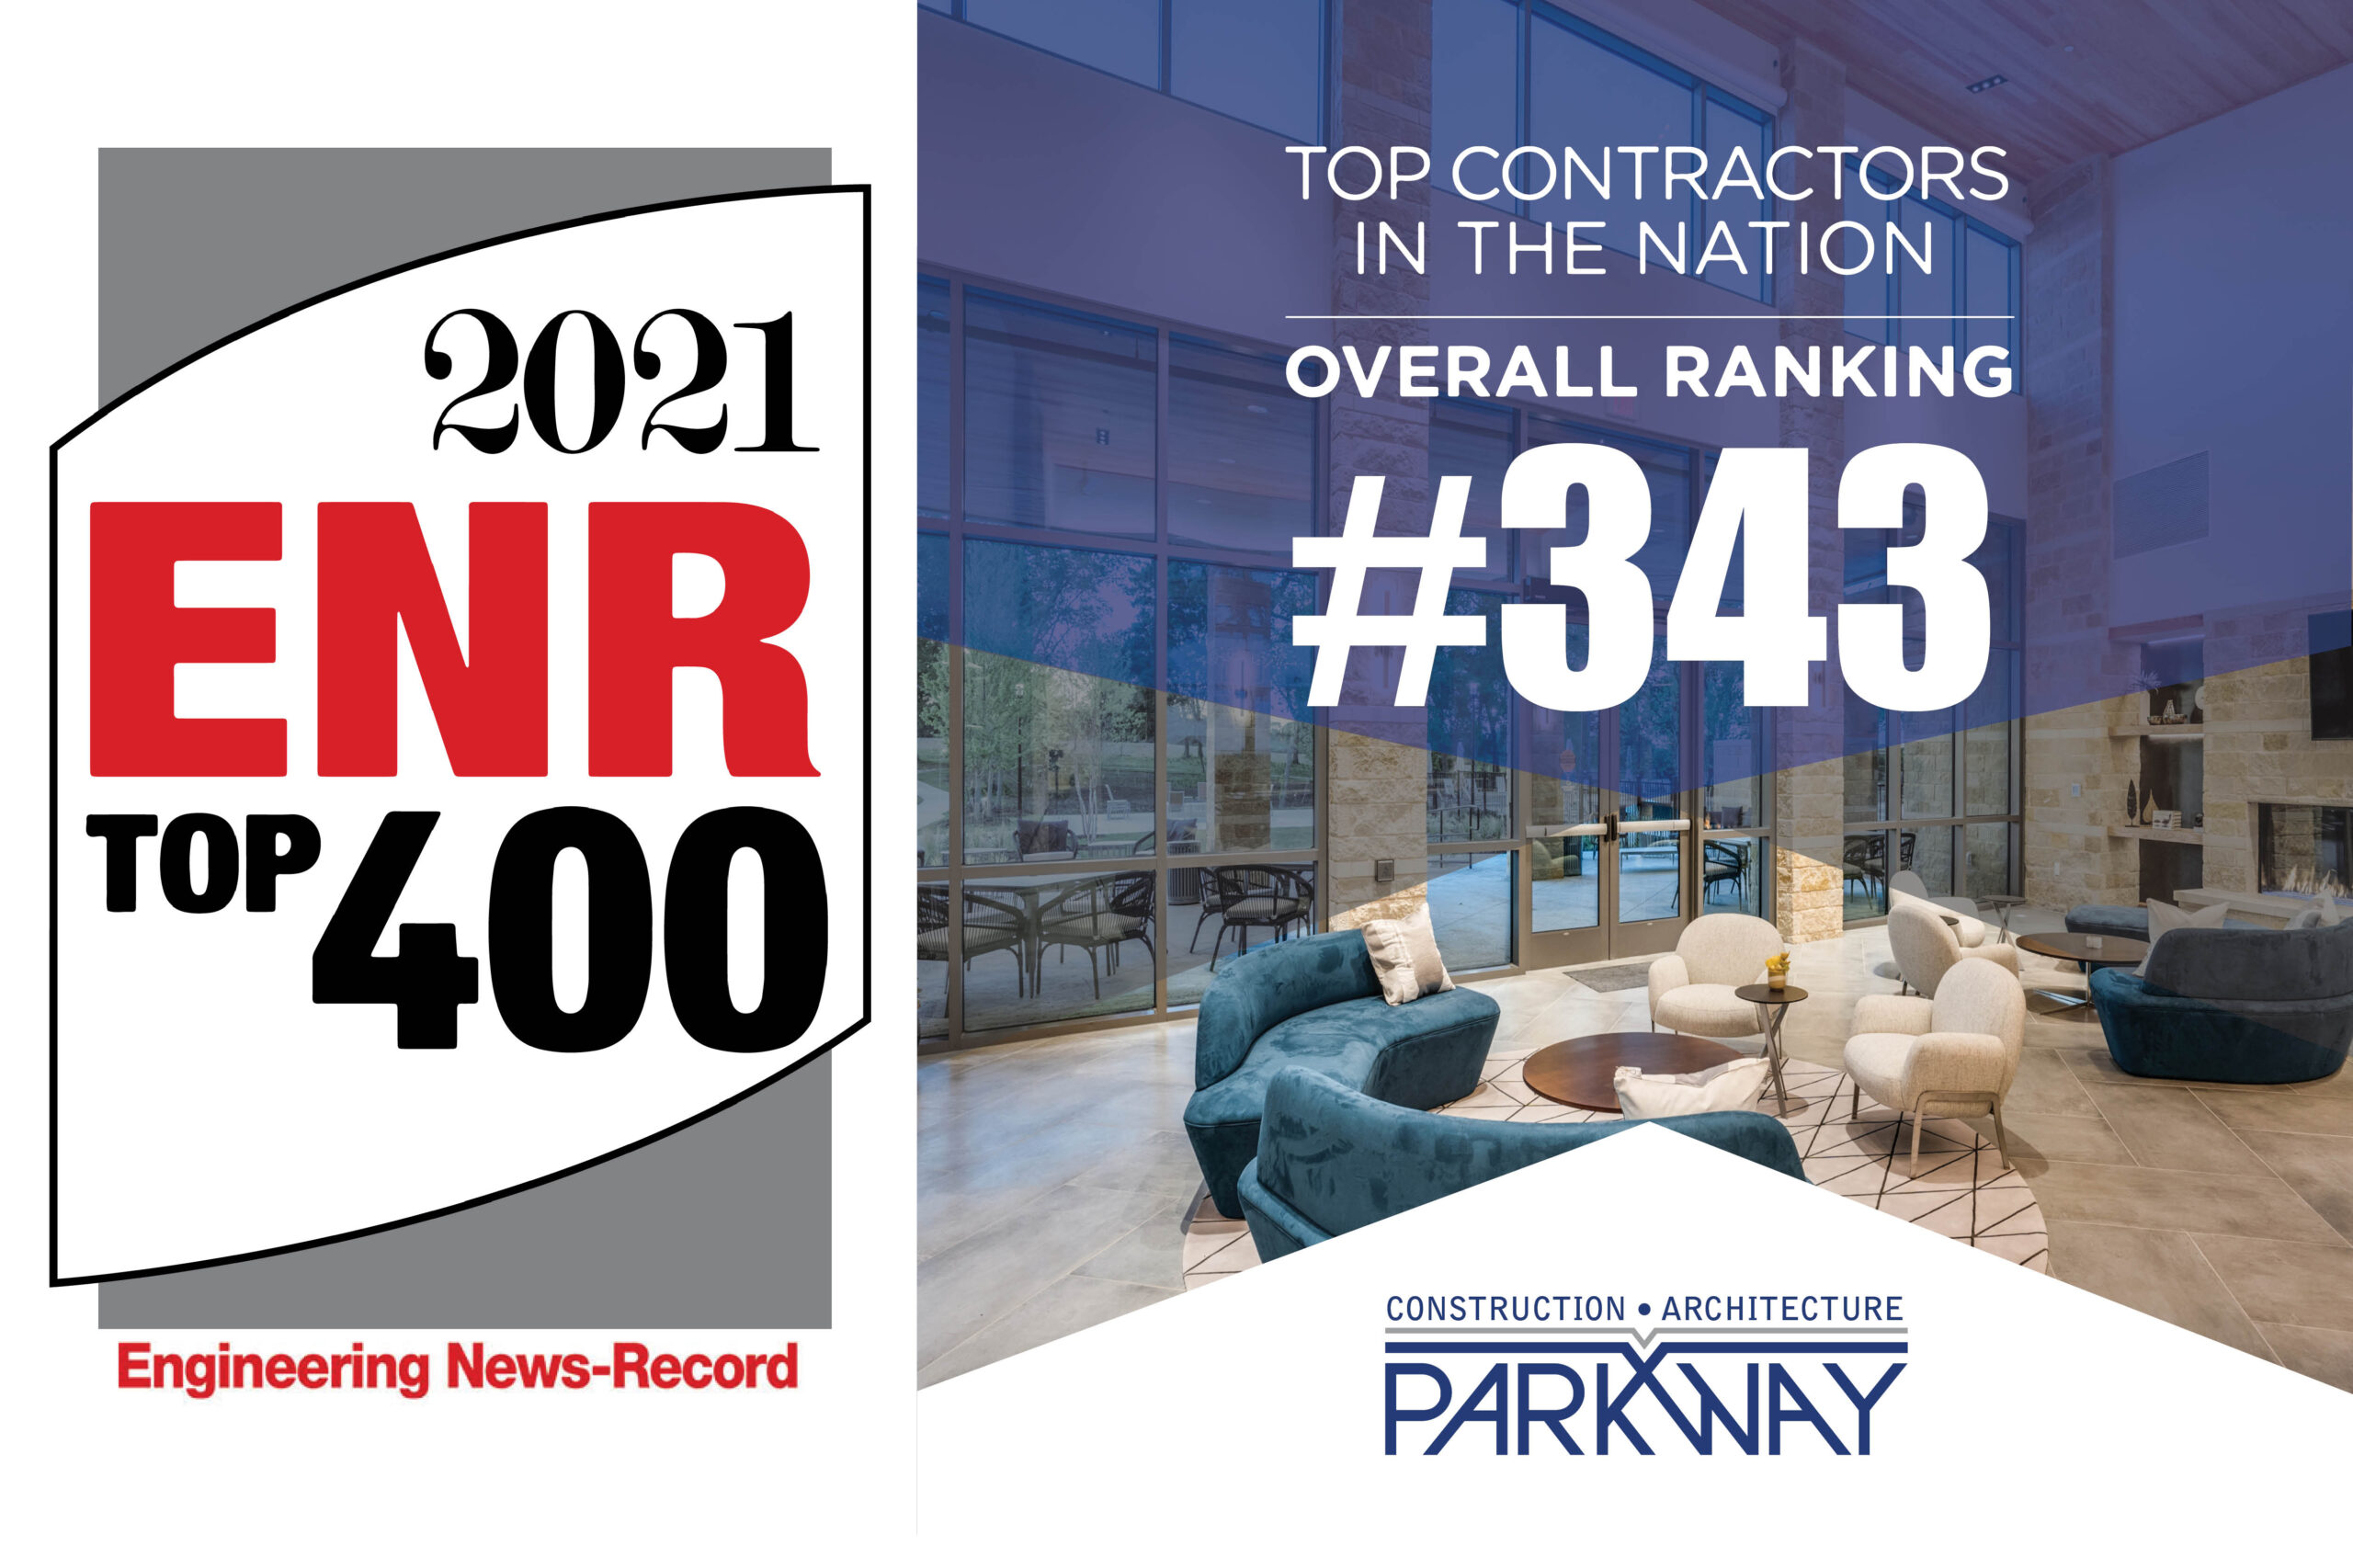 Parkway C&A, LP Named Top Contractor in ENR Top 400 List